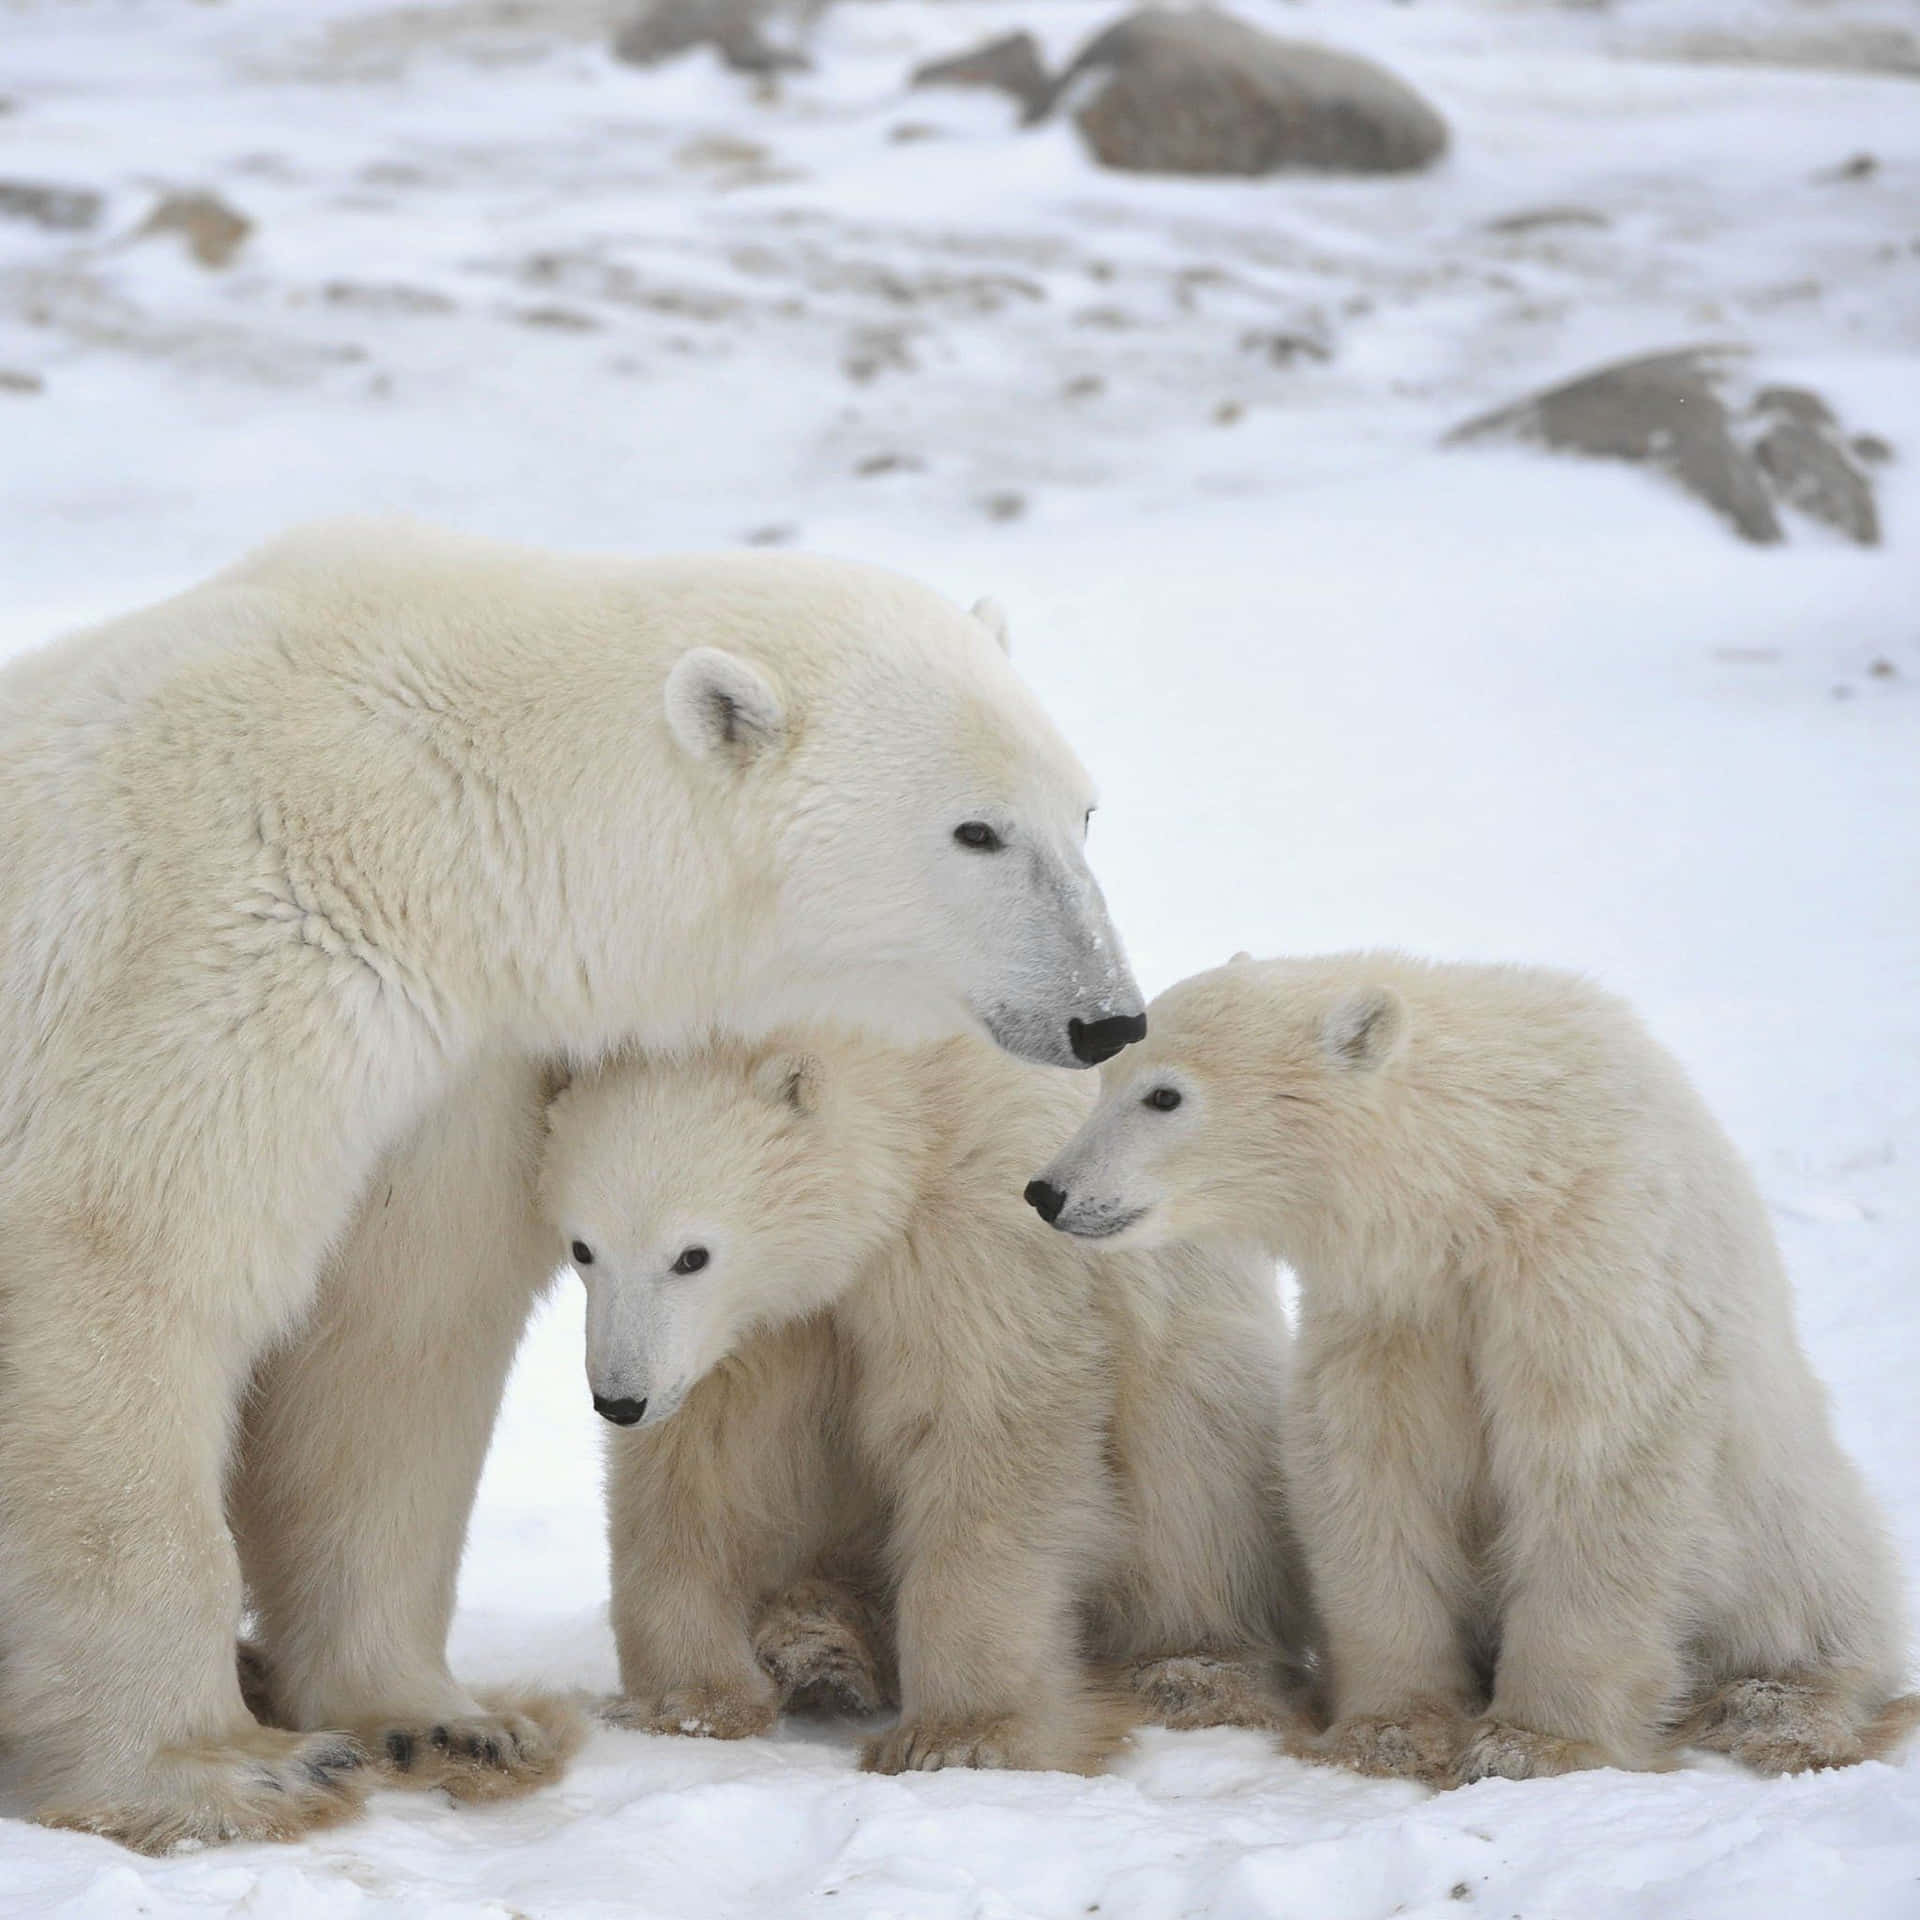 A majestic polar bear steps through a peaceful winter landscape